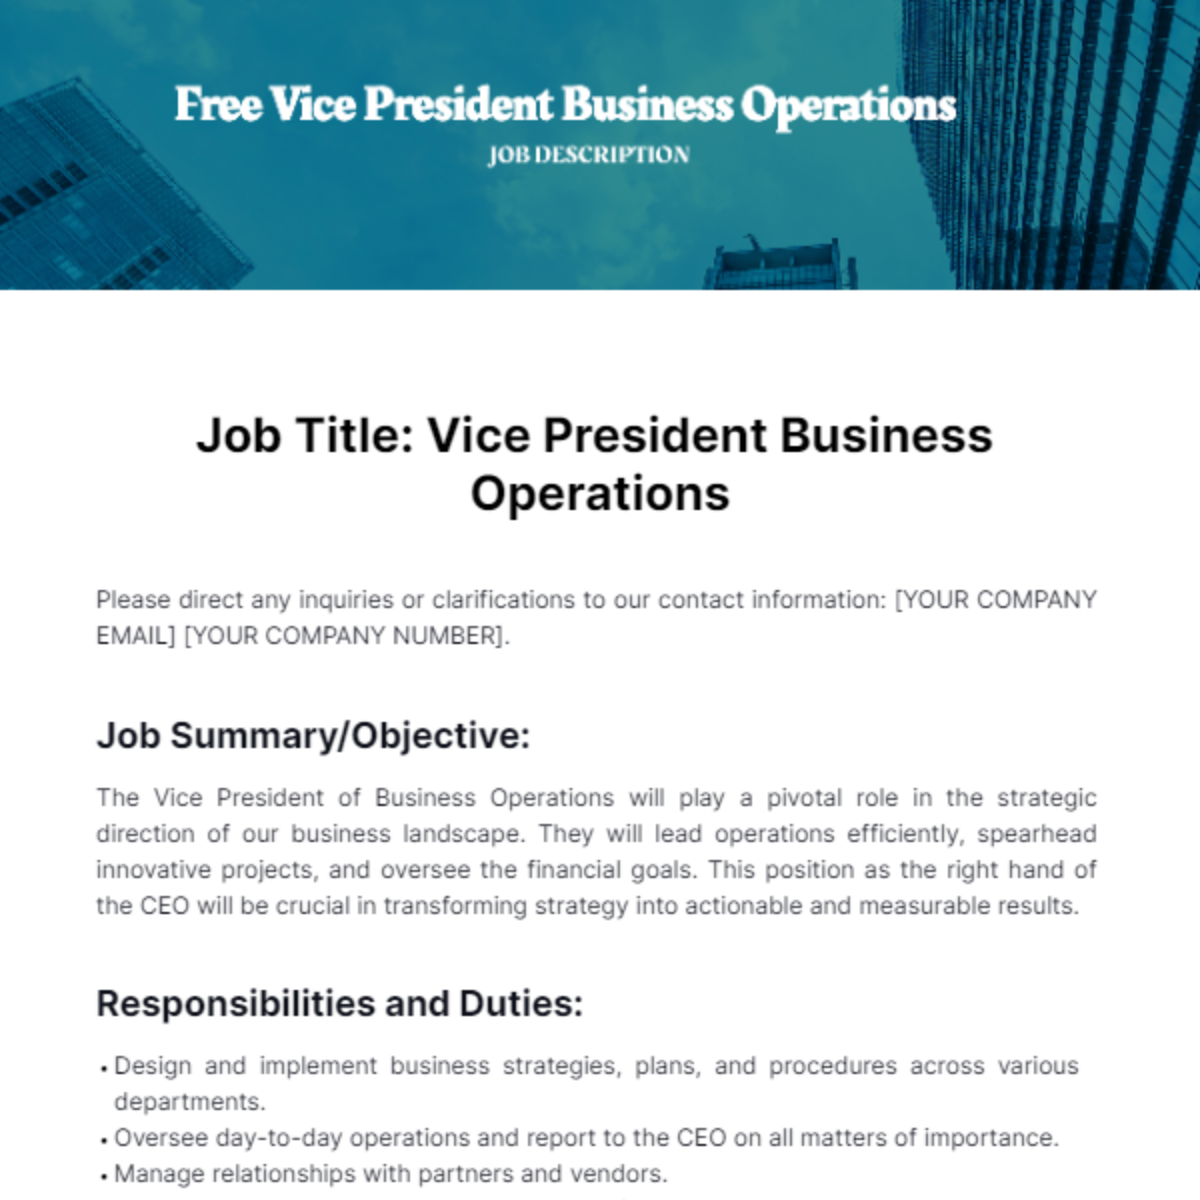 Free Vice President Business Operations Job Description Template